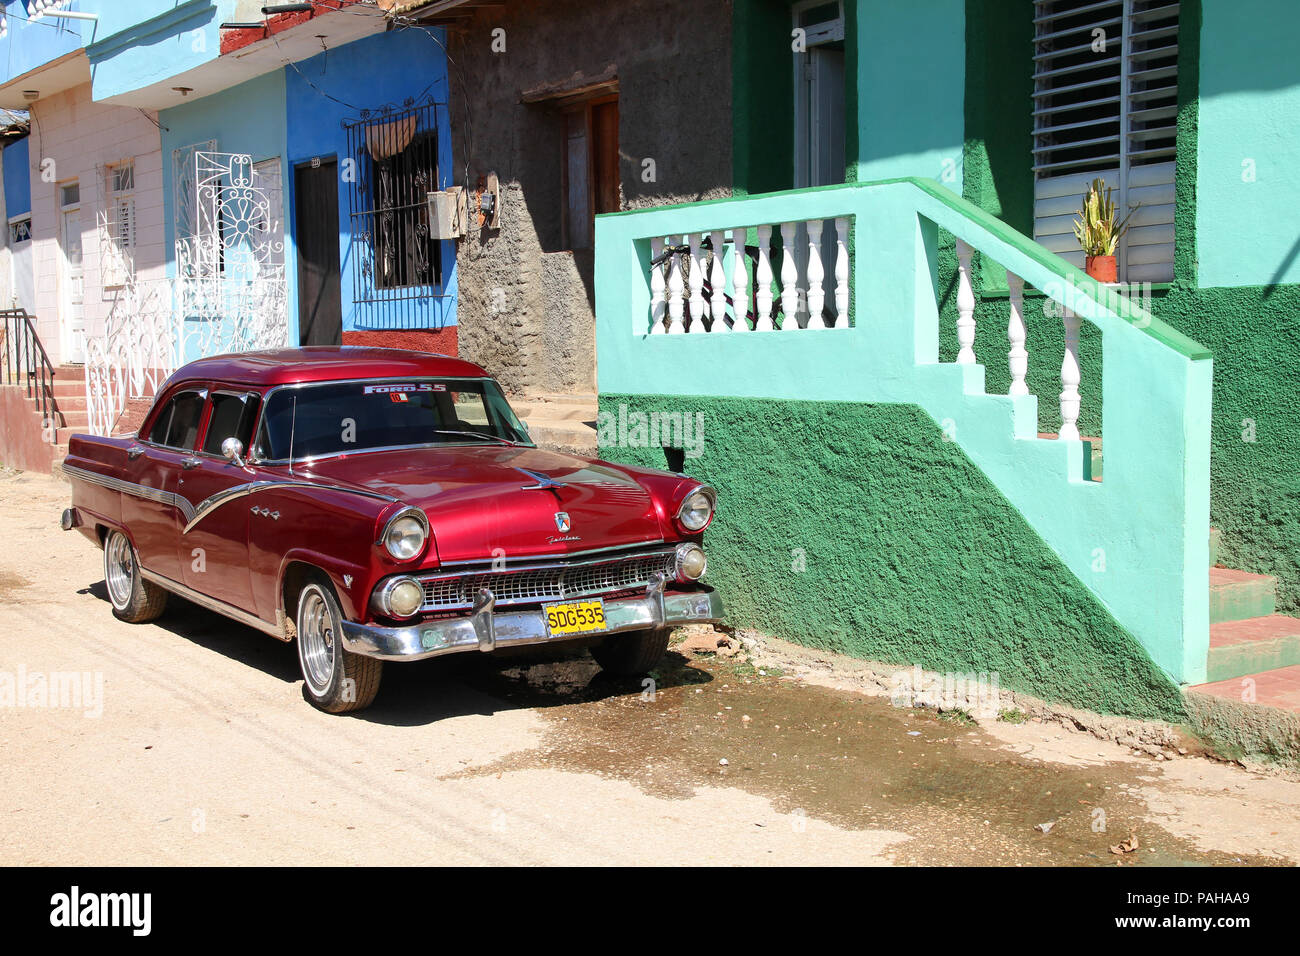 TRINIDAD, CUBA - FEBRUARY 5: Classic American car parked in the street on February 5, 2011 in Trinidad, Cuba. The multitude of oldtimer cars in Cuba i Stock Photo